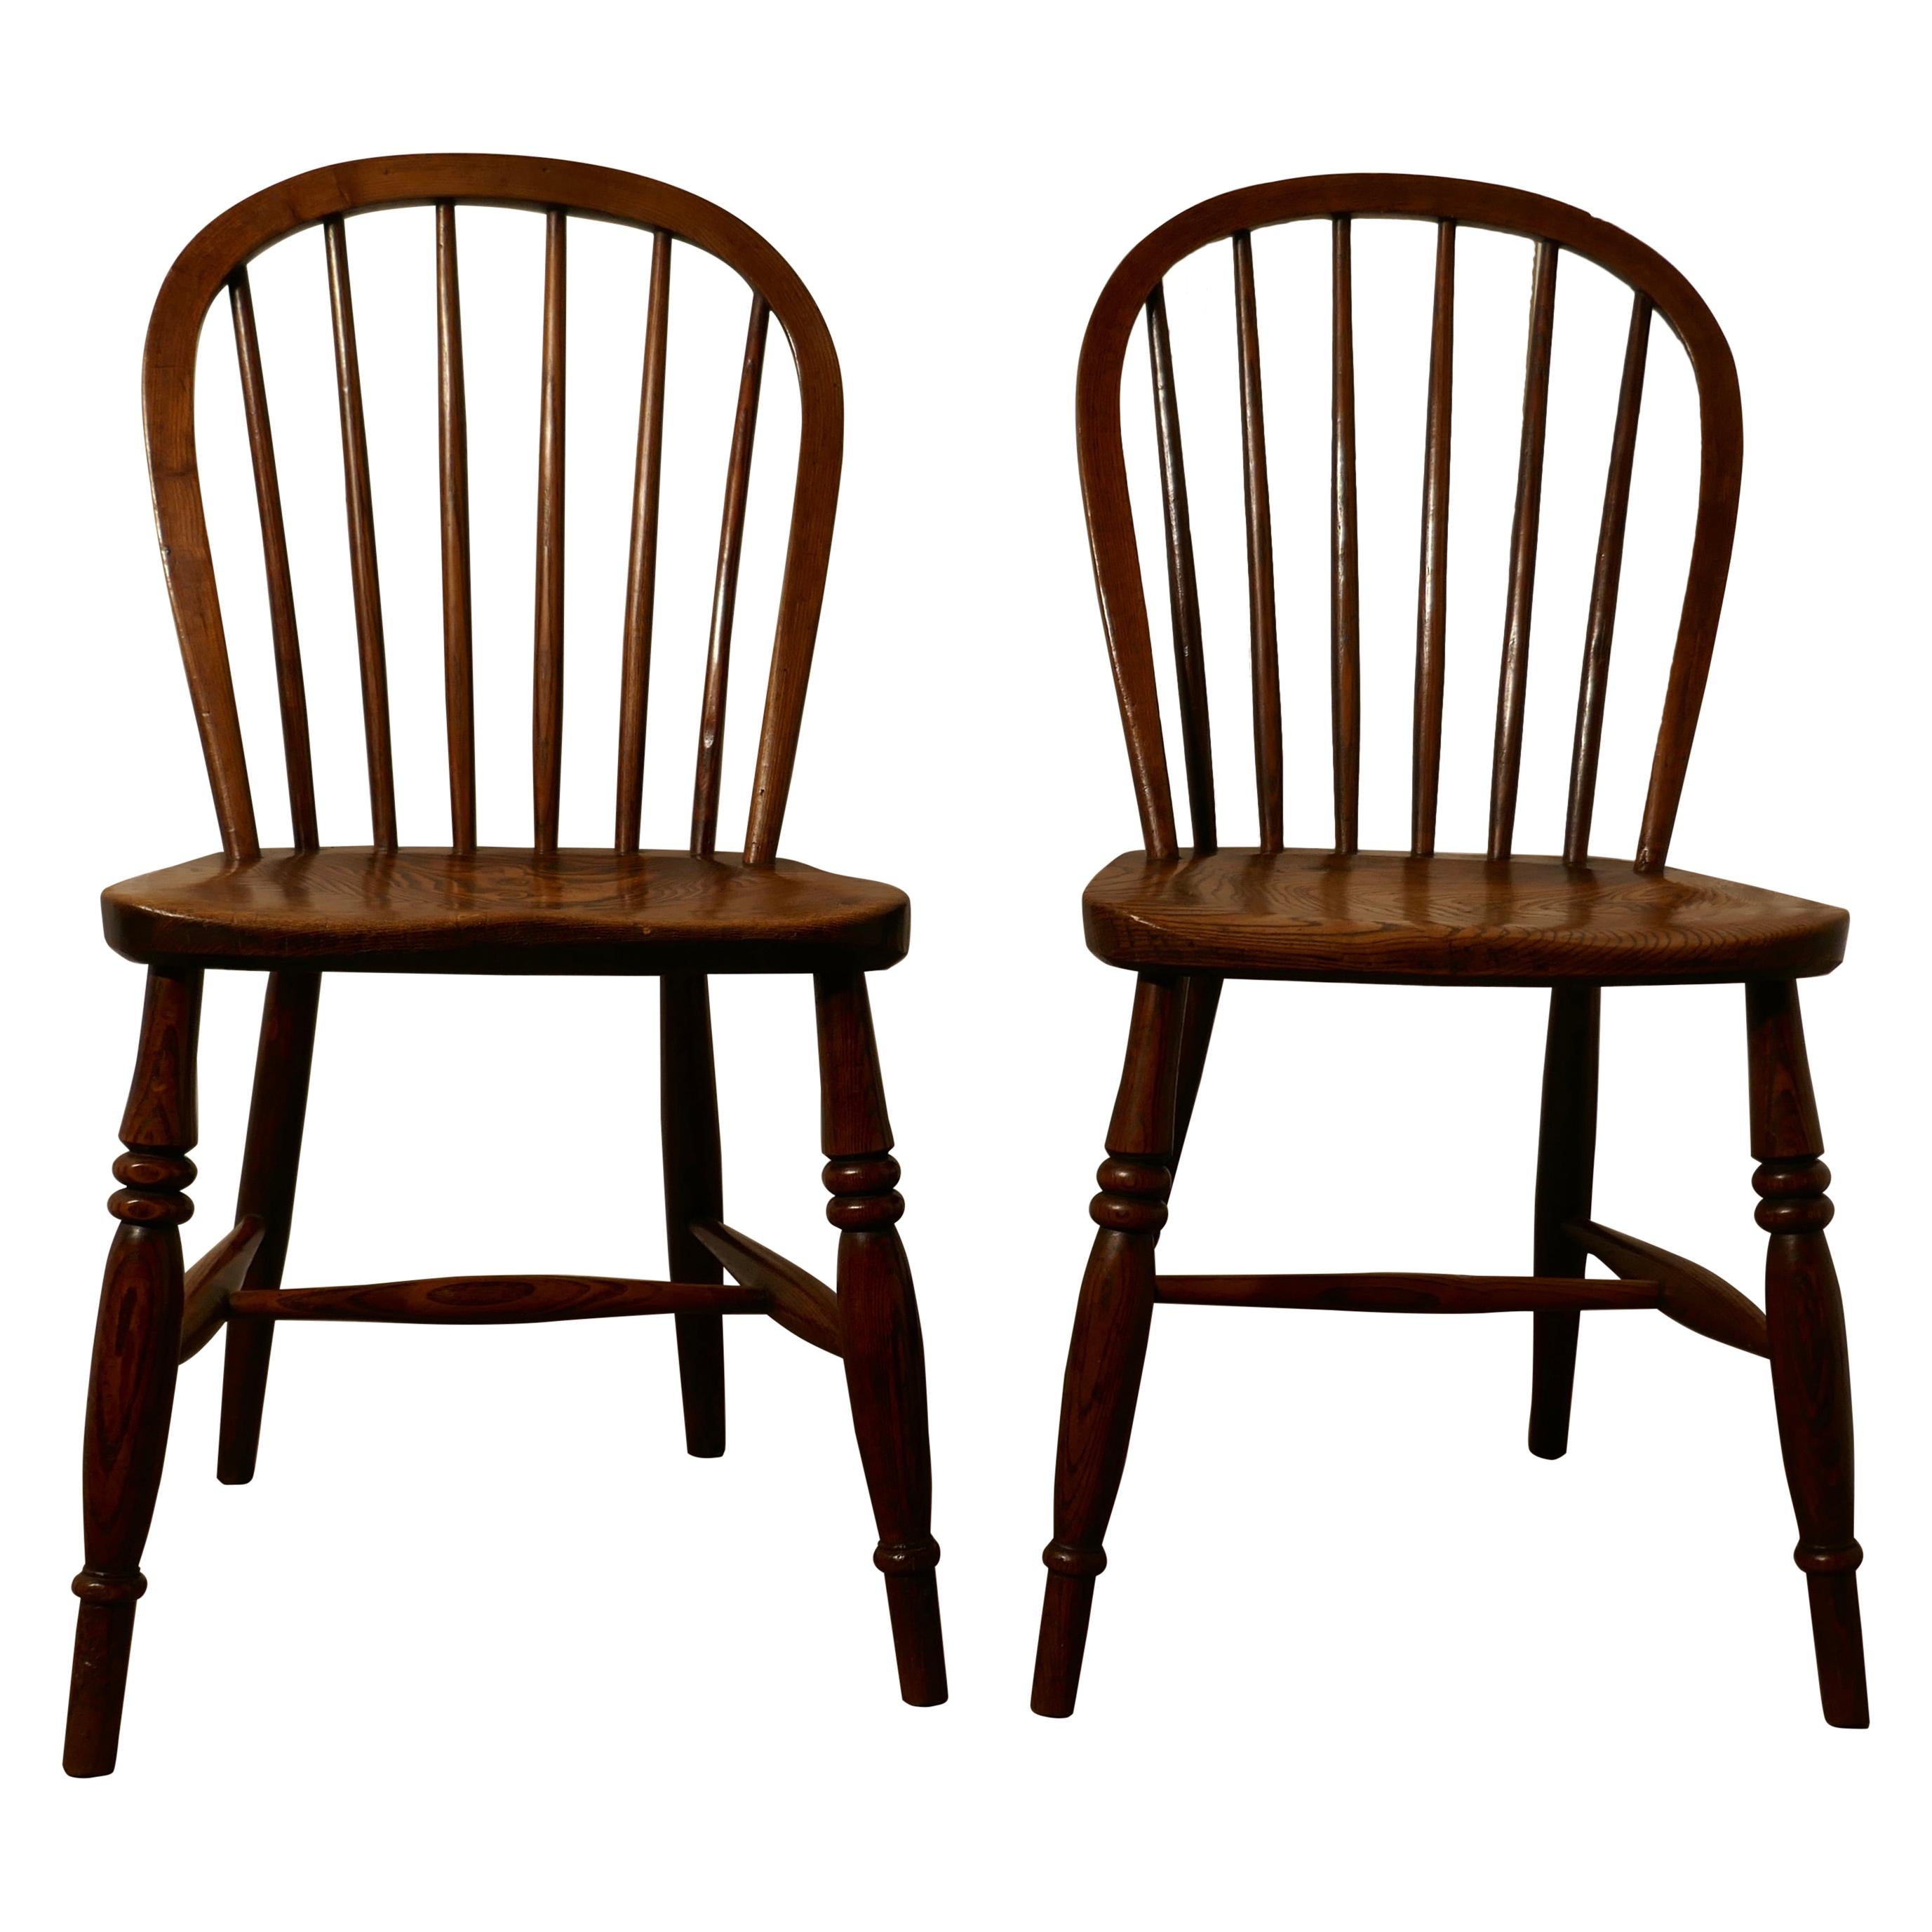 Pair of Solid Ash Windsor Hoop Back Chairs